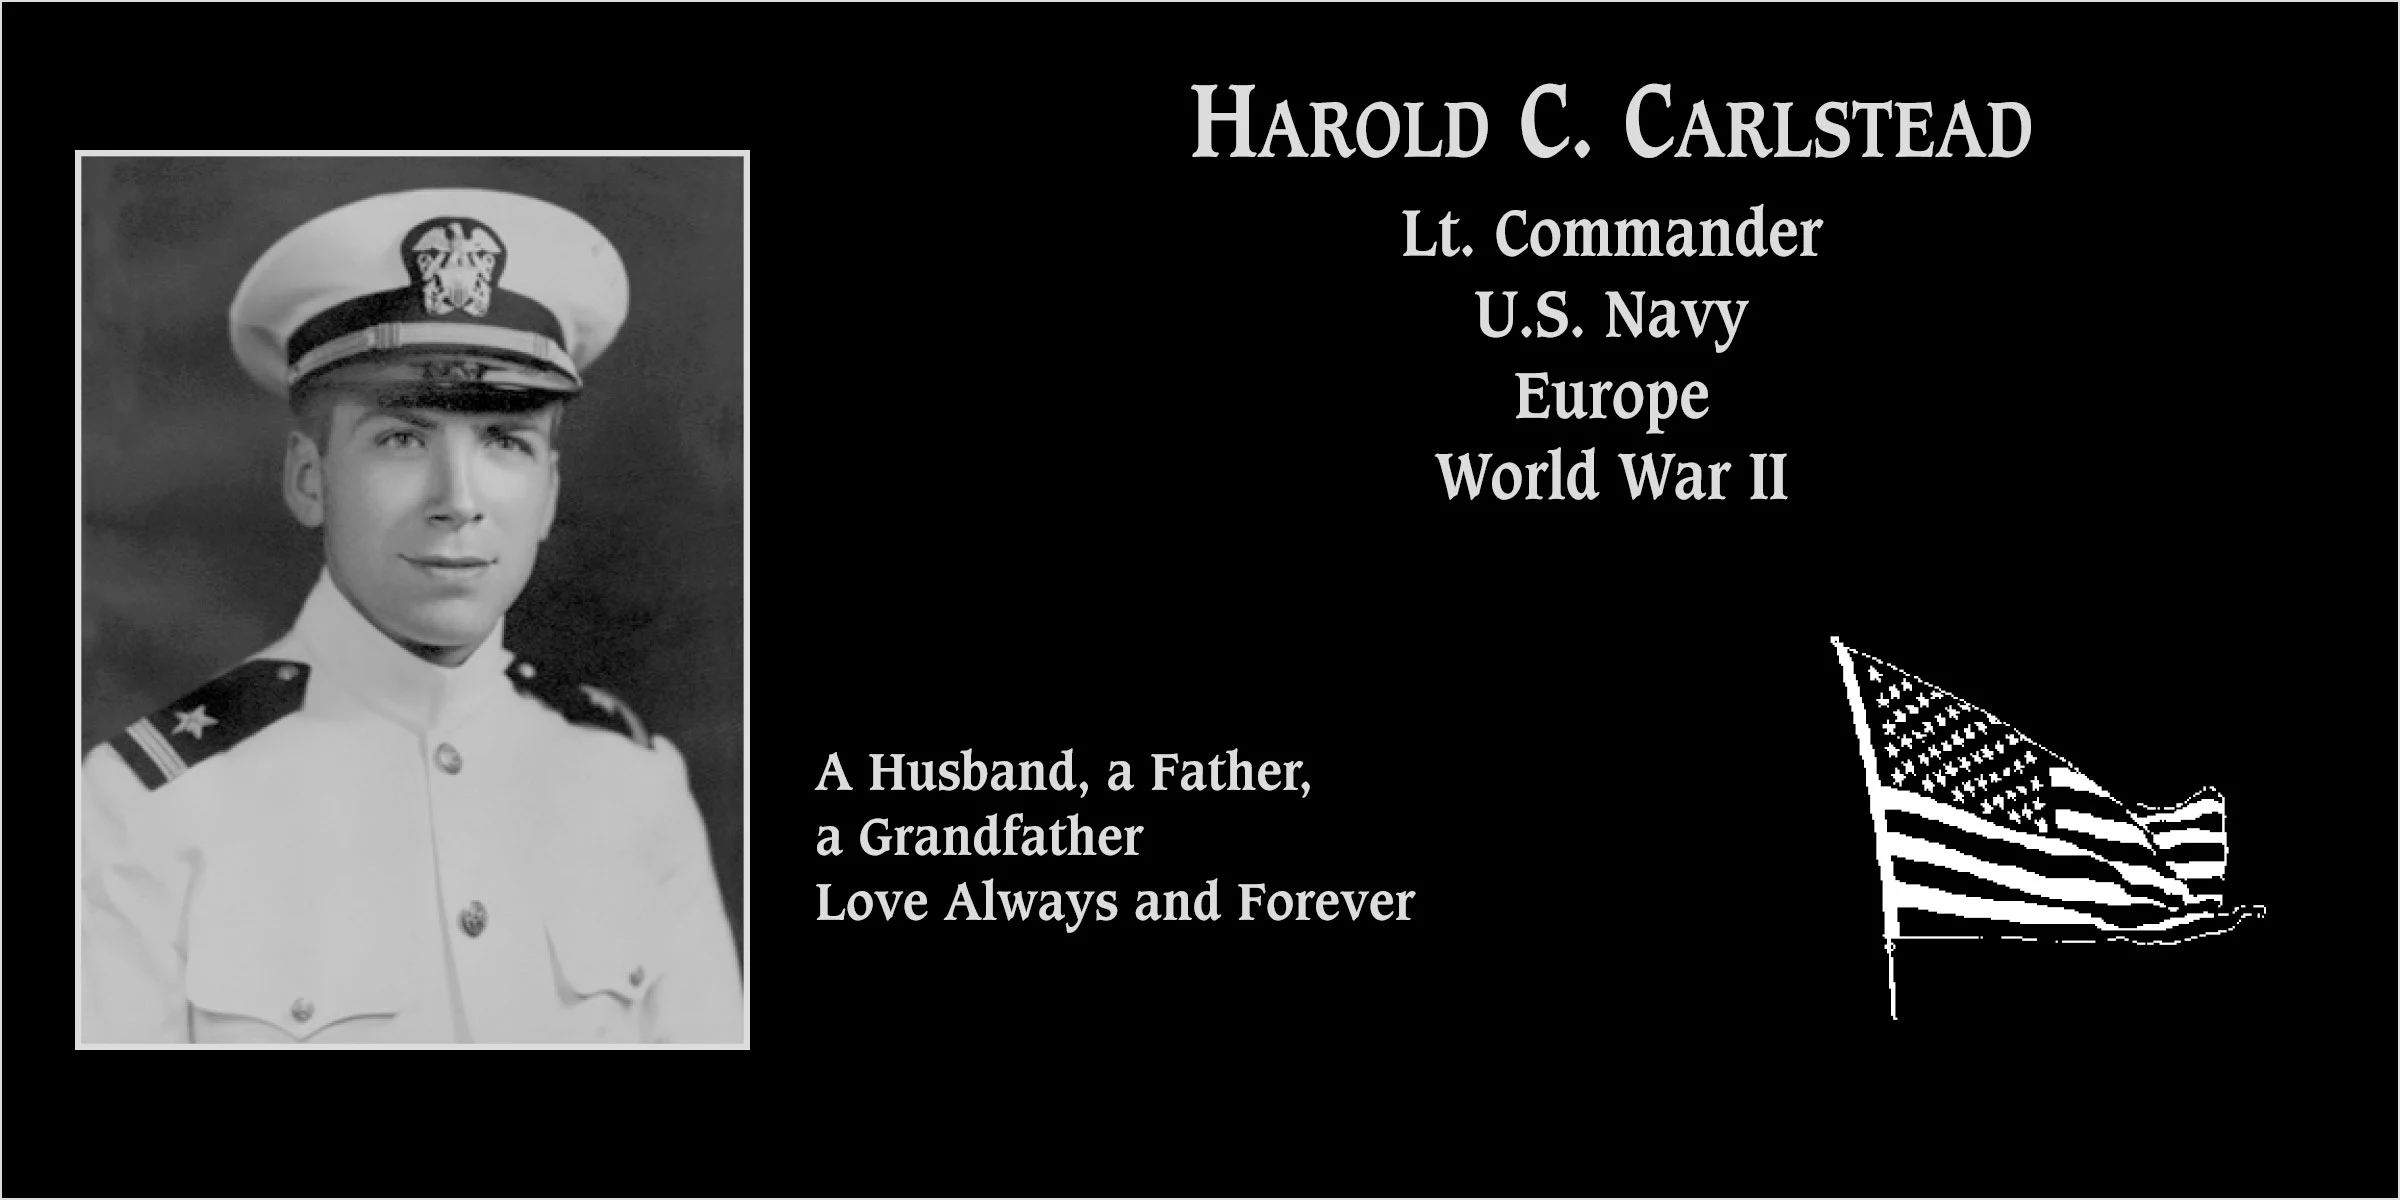 Harold C. Carlstead